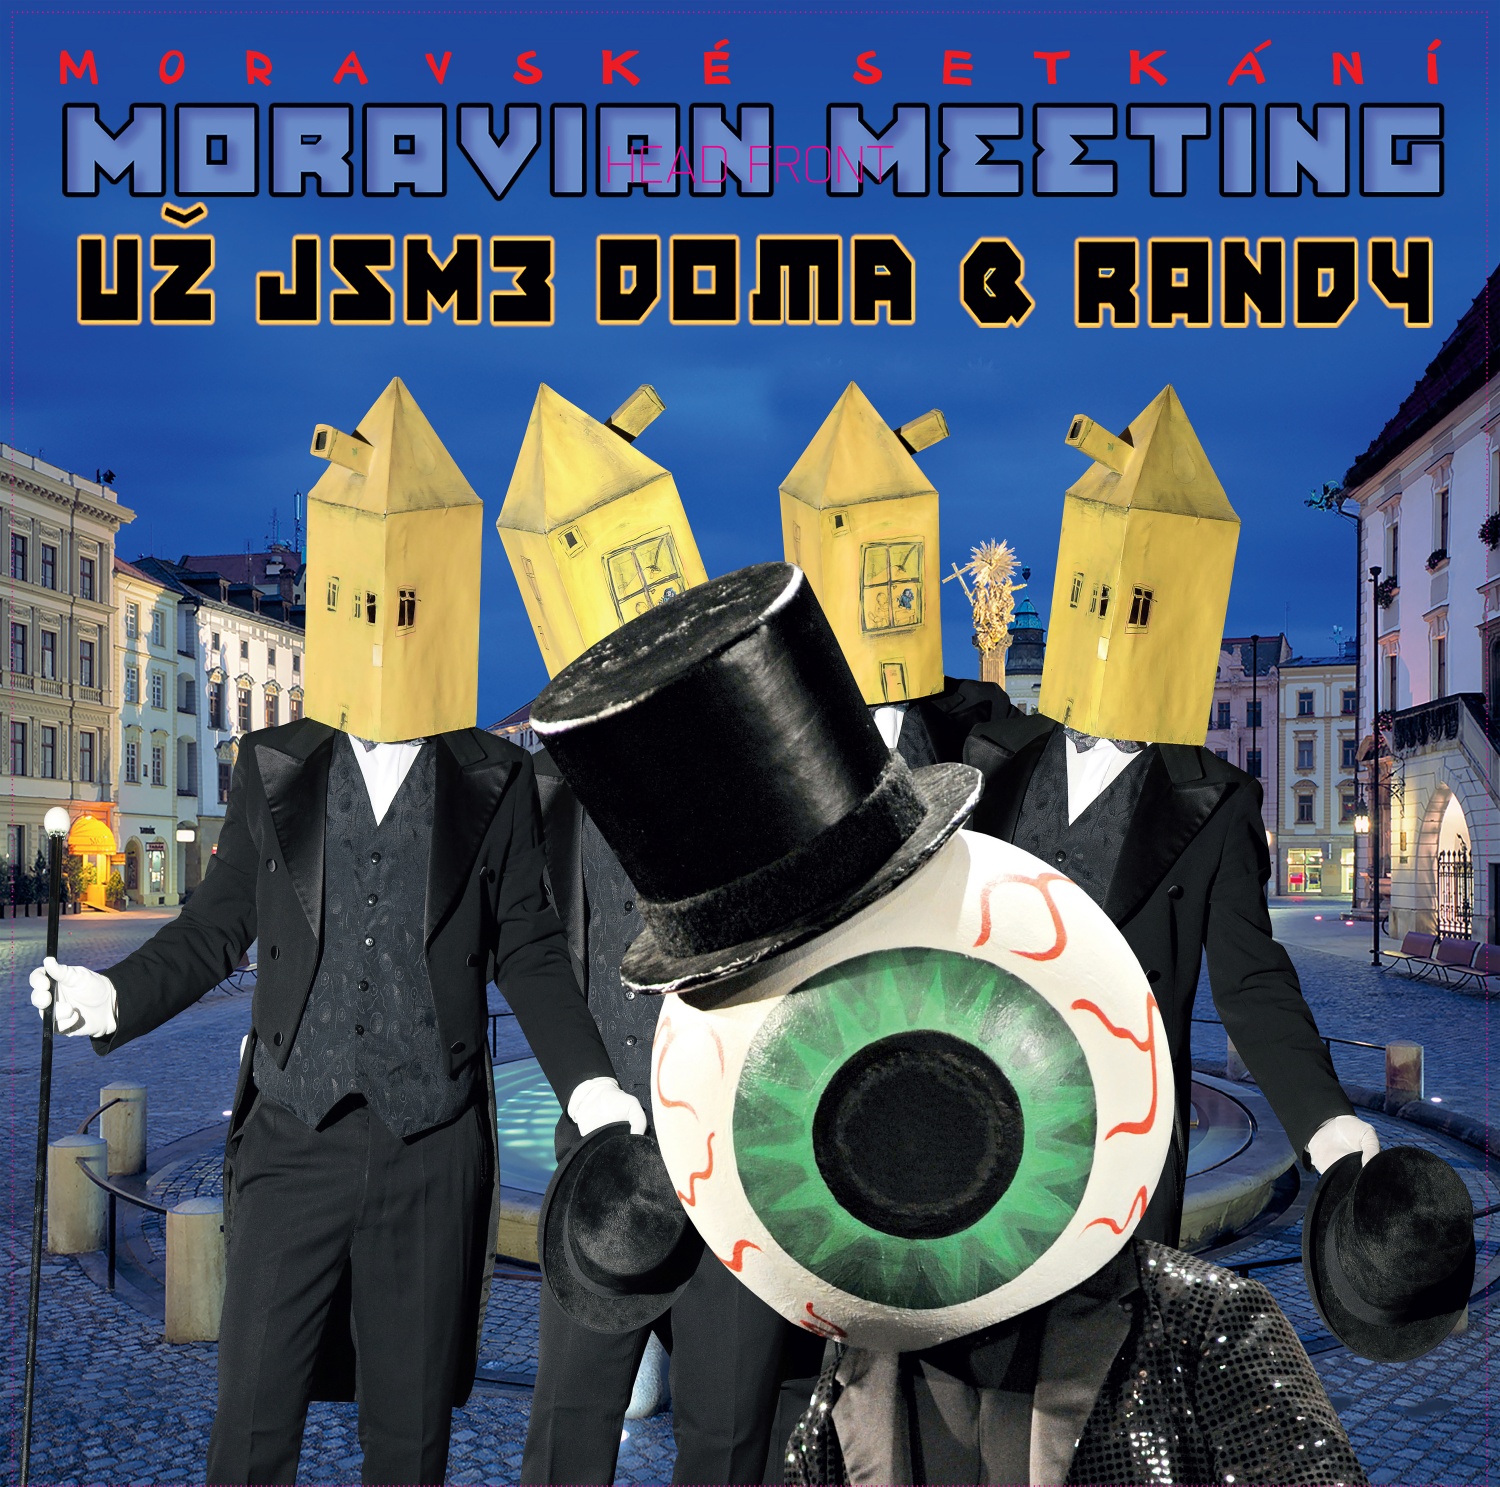 Už Jsme Doma & Randy – Moravian Meeting